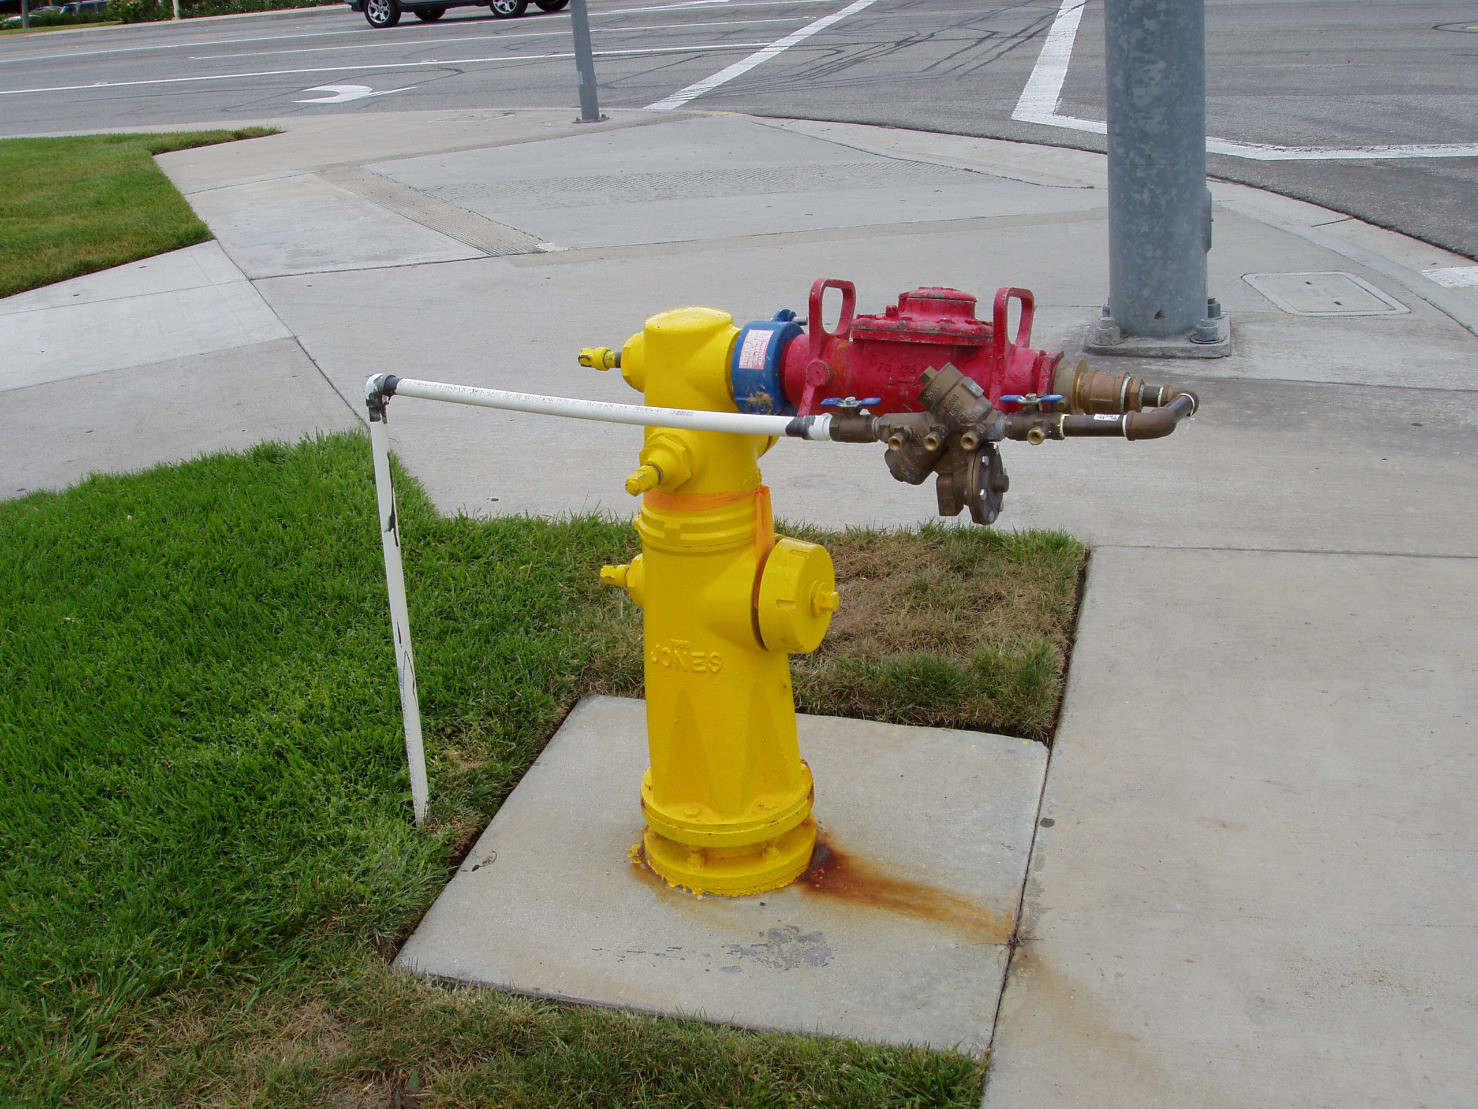 Rube Goldberg plumbing?#weird



